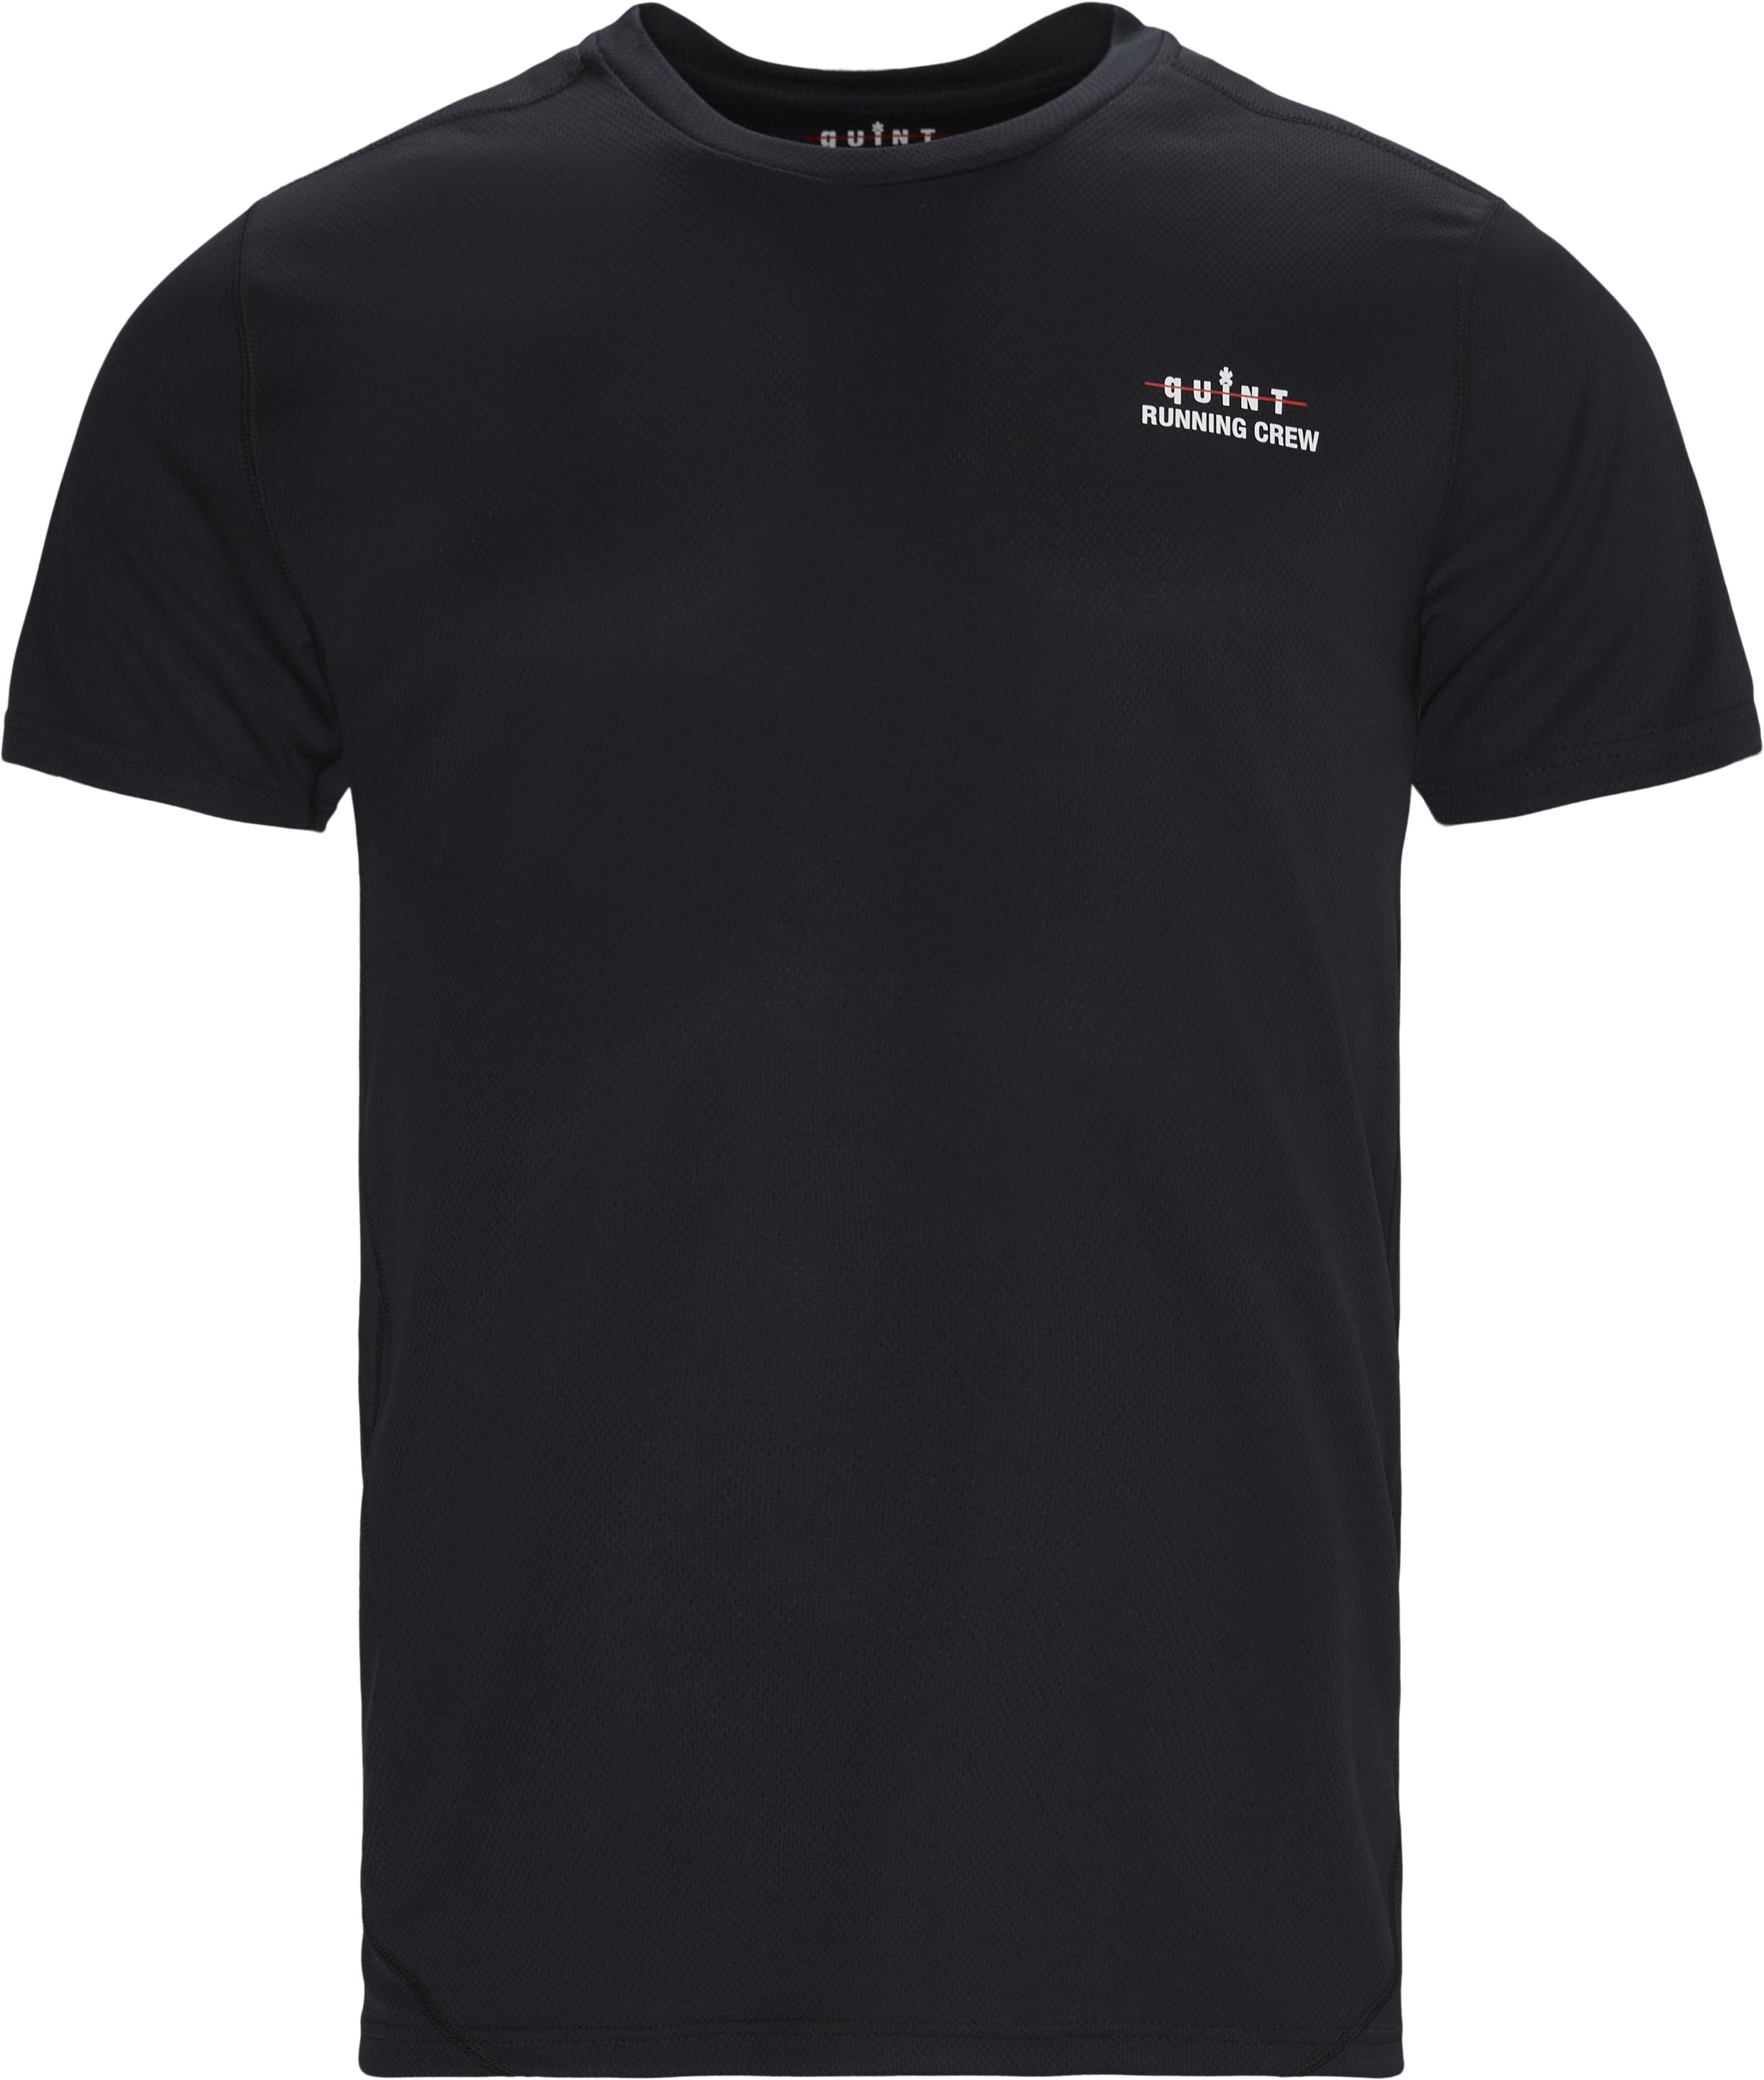 Quint Running Crew Troy Tee - T-shirts - Regular fit - Svart